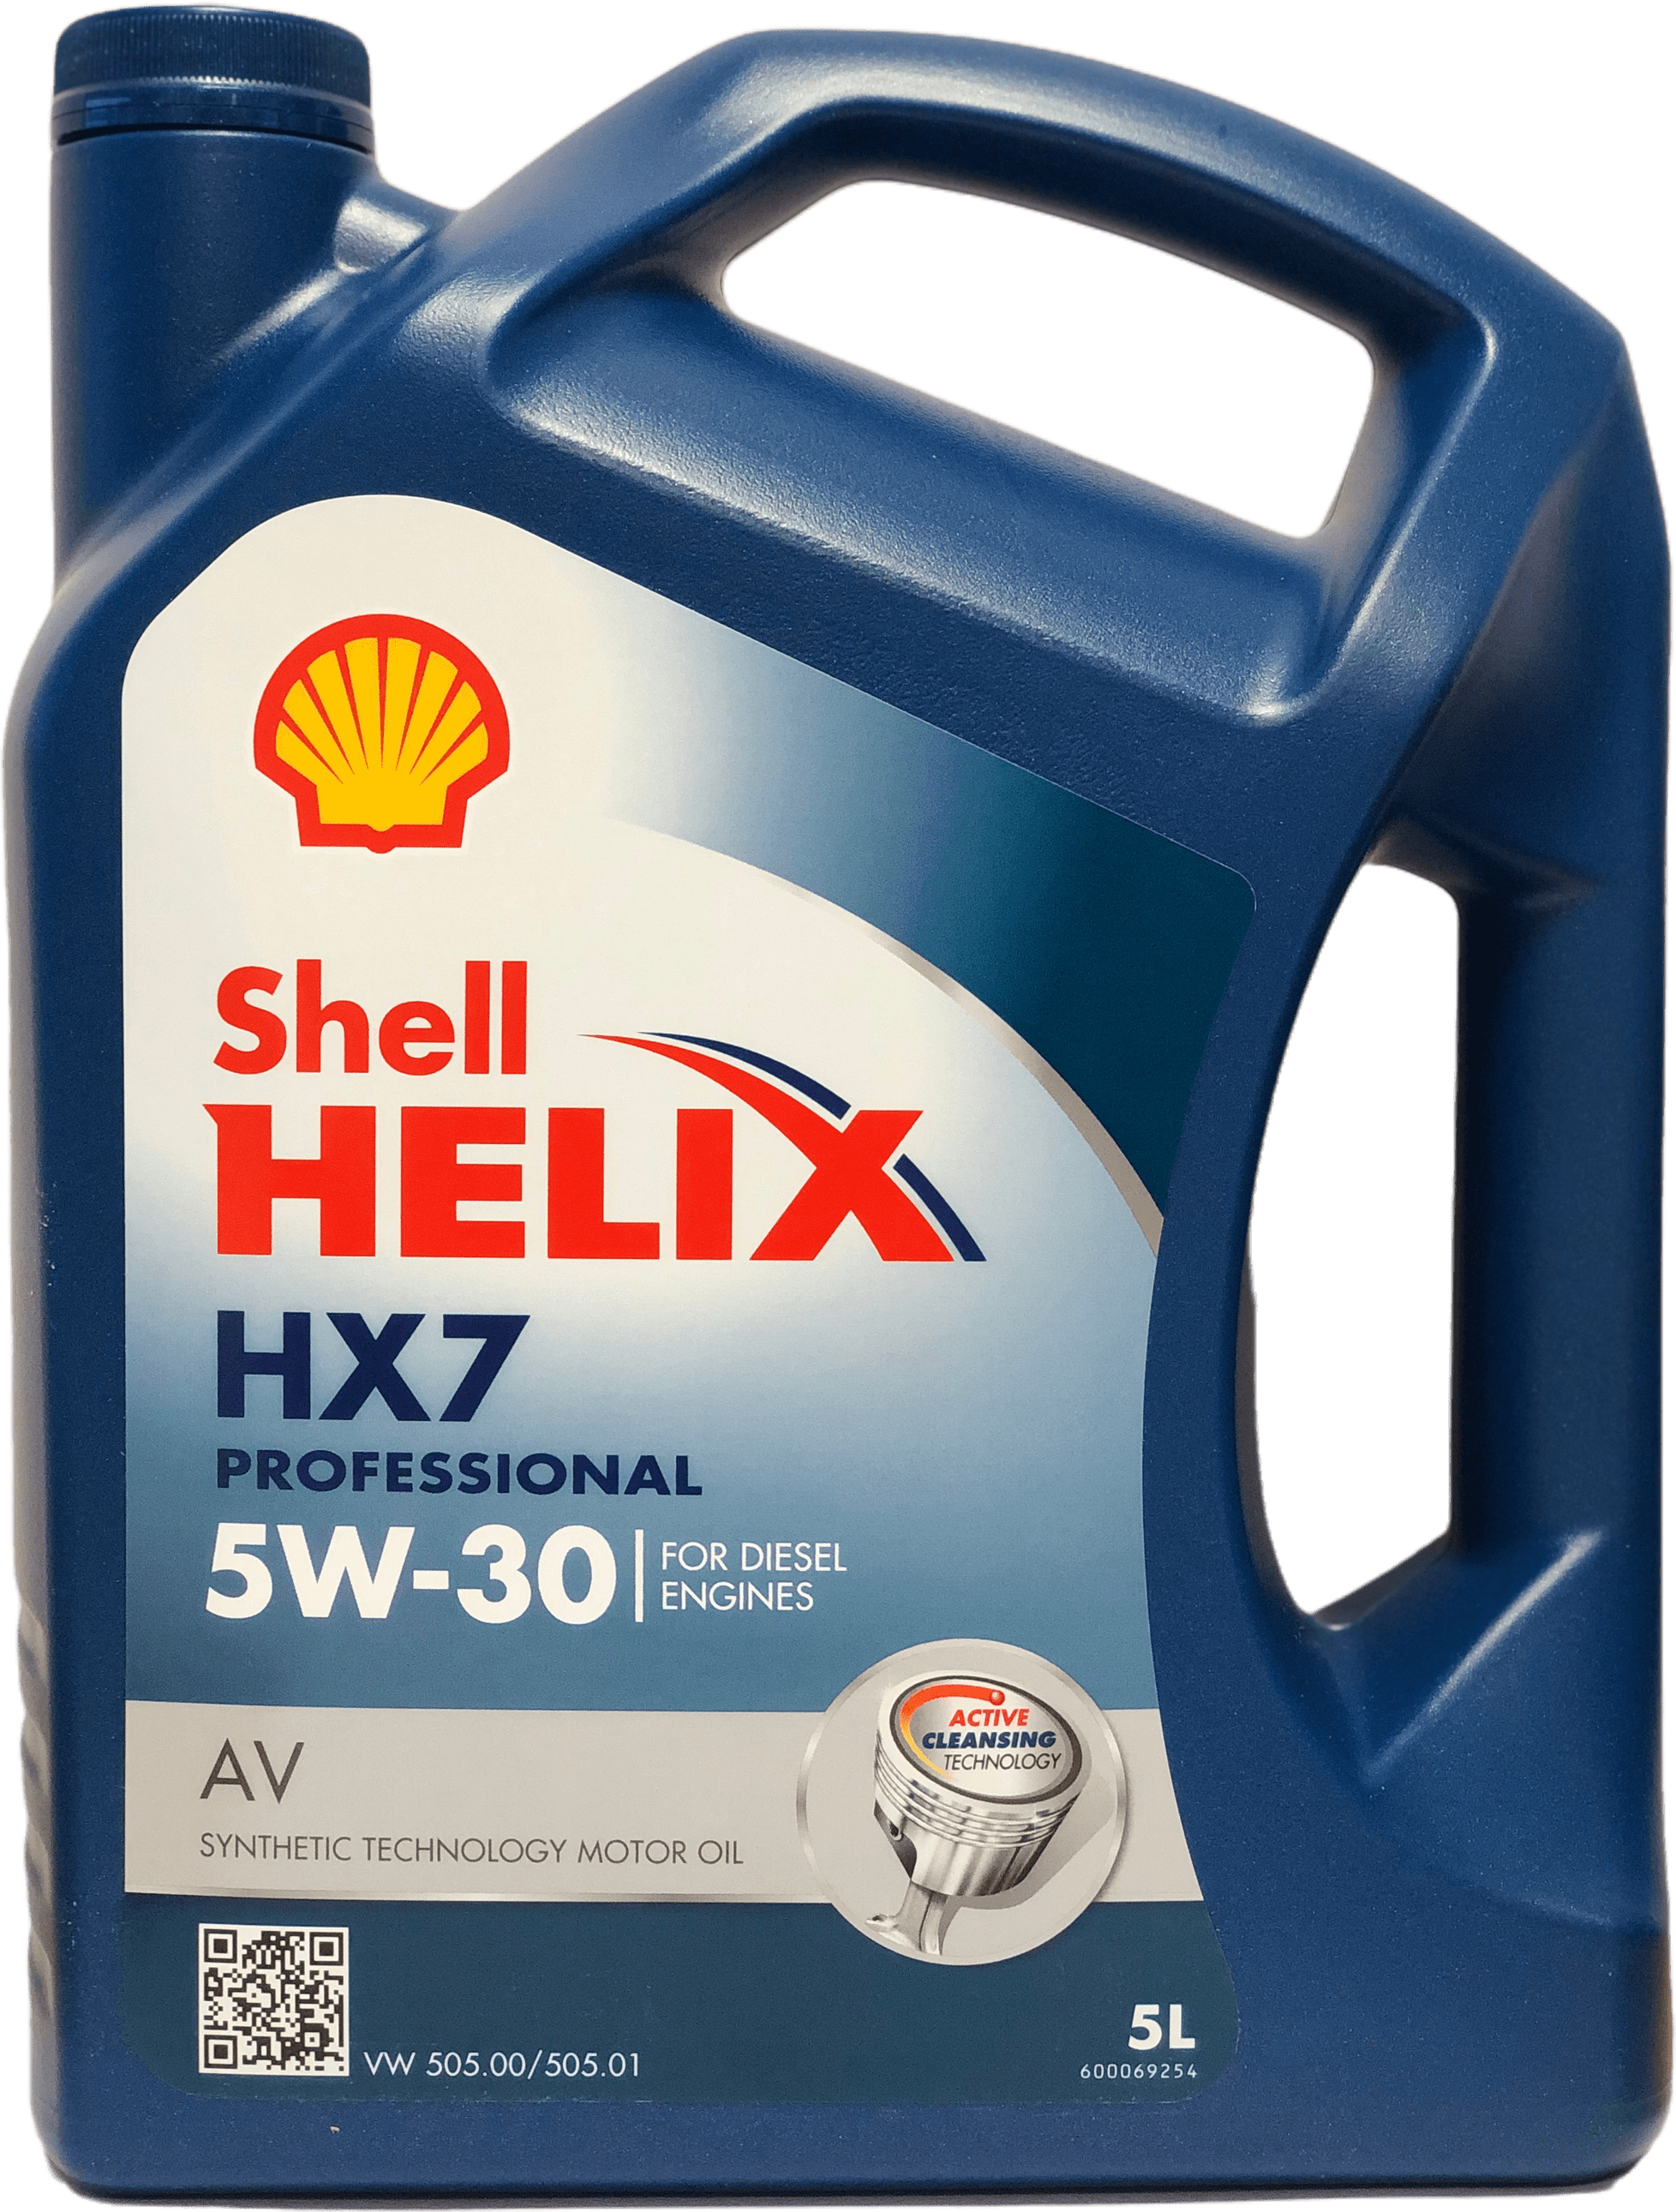 Shell Helix HX7 Professional AV 5W-30, 5 lt